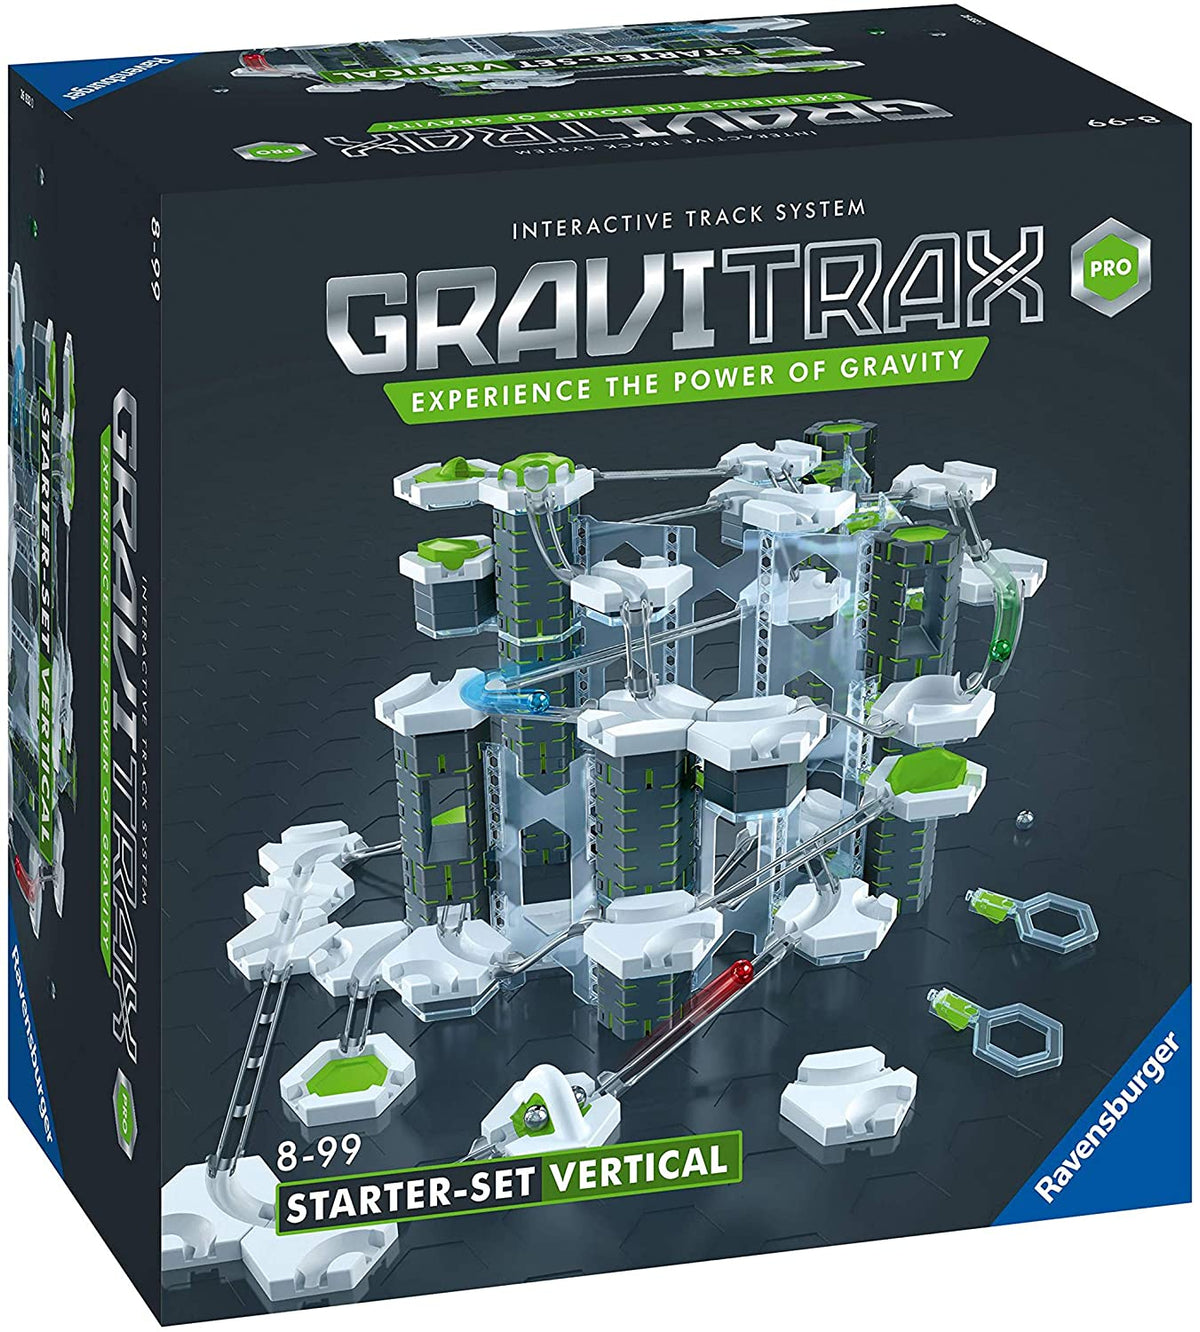 MB Catalogue: GraviTrax - PRO Starter-Set Vertical